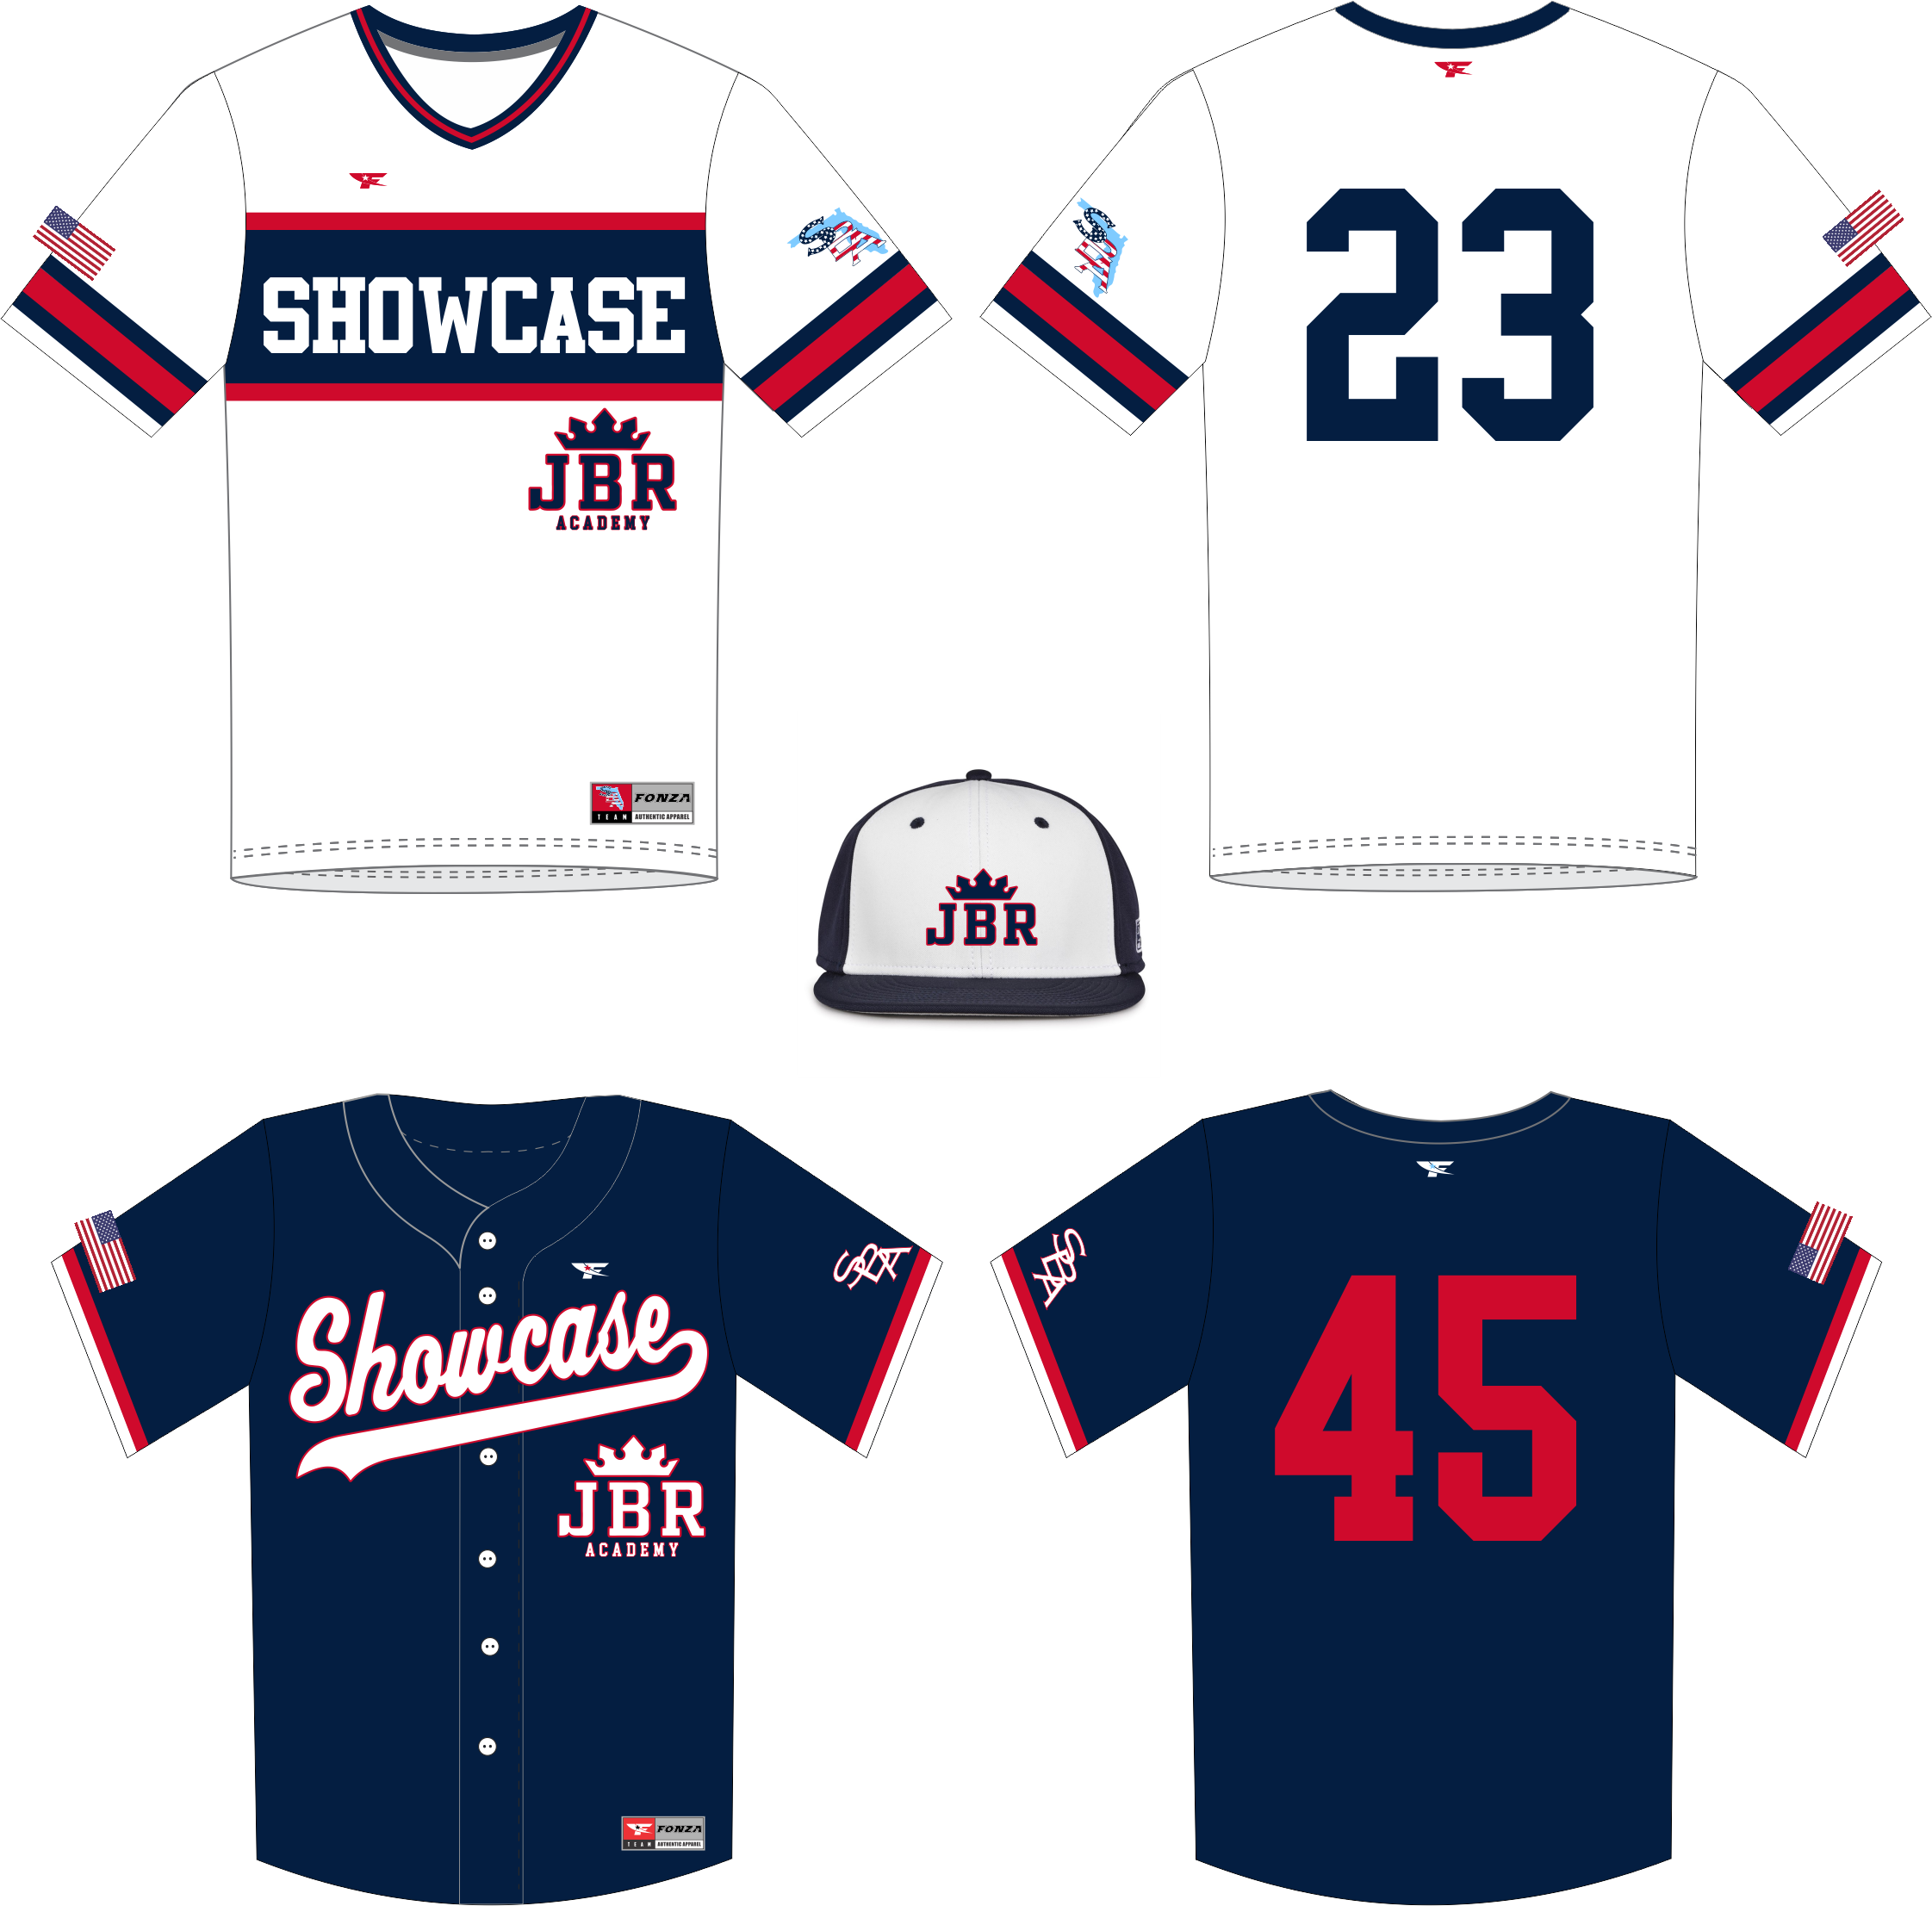 Showcase Baseball Academy Baseball Uniforms JBR Package